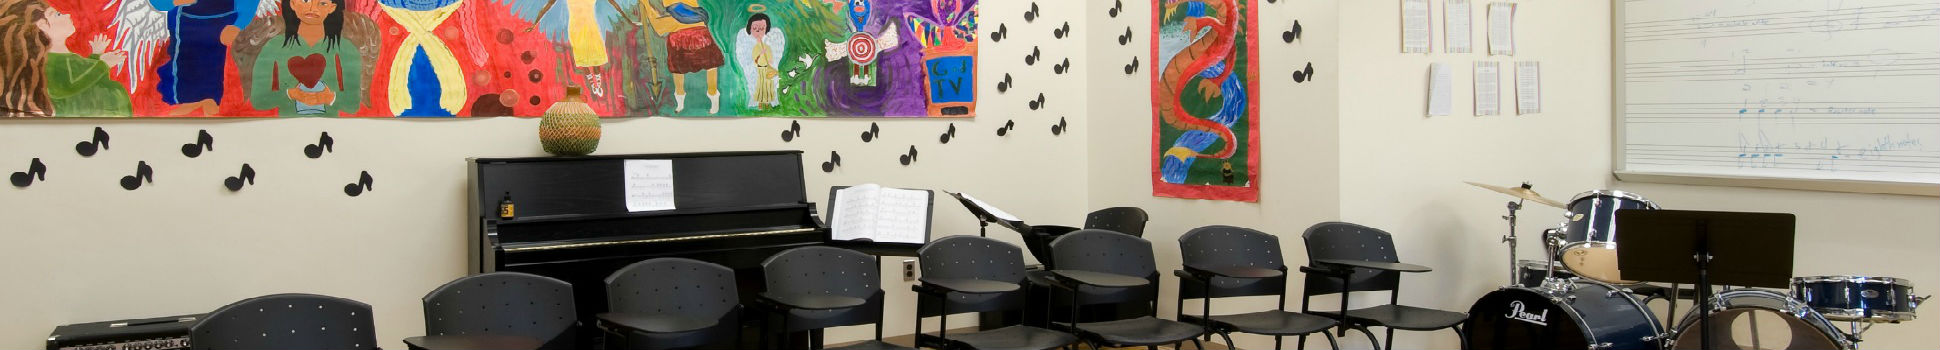 El Puente High School Music Room - Brooklyn